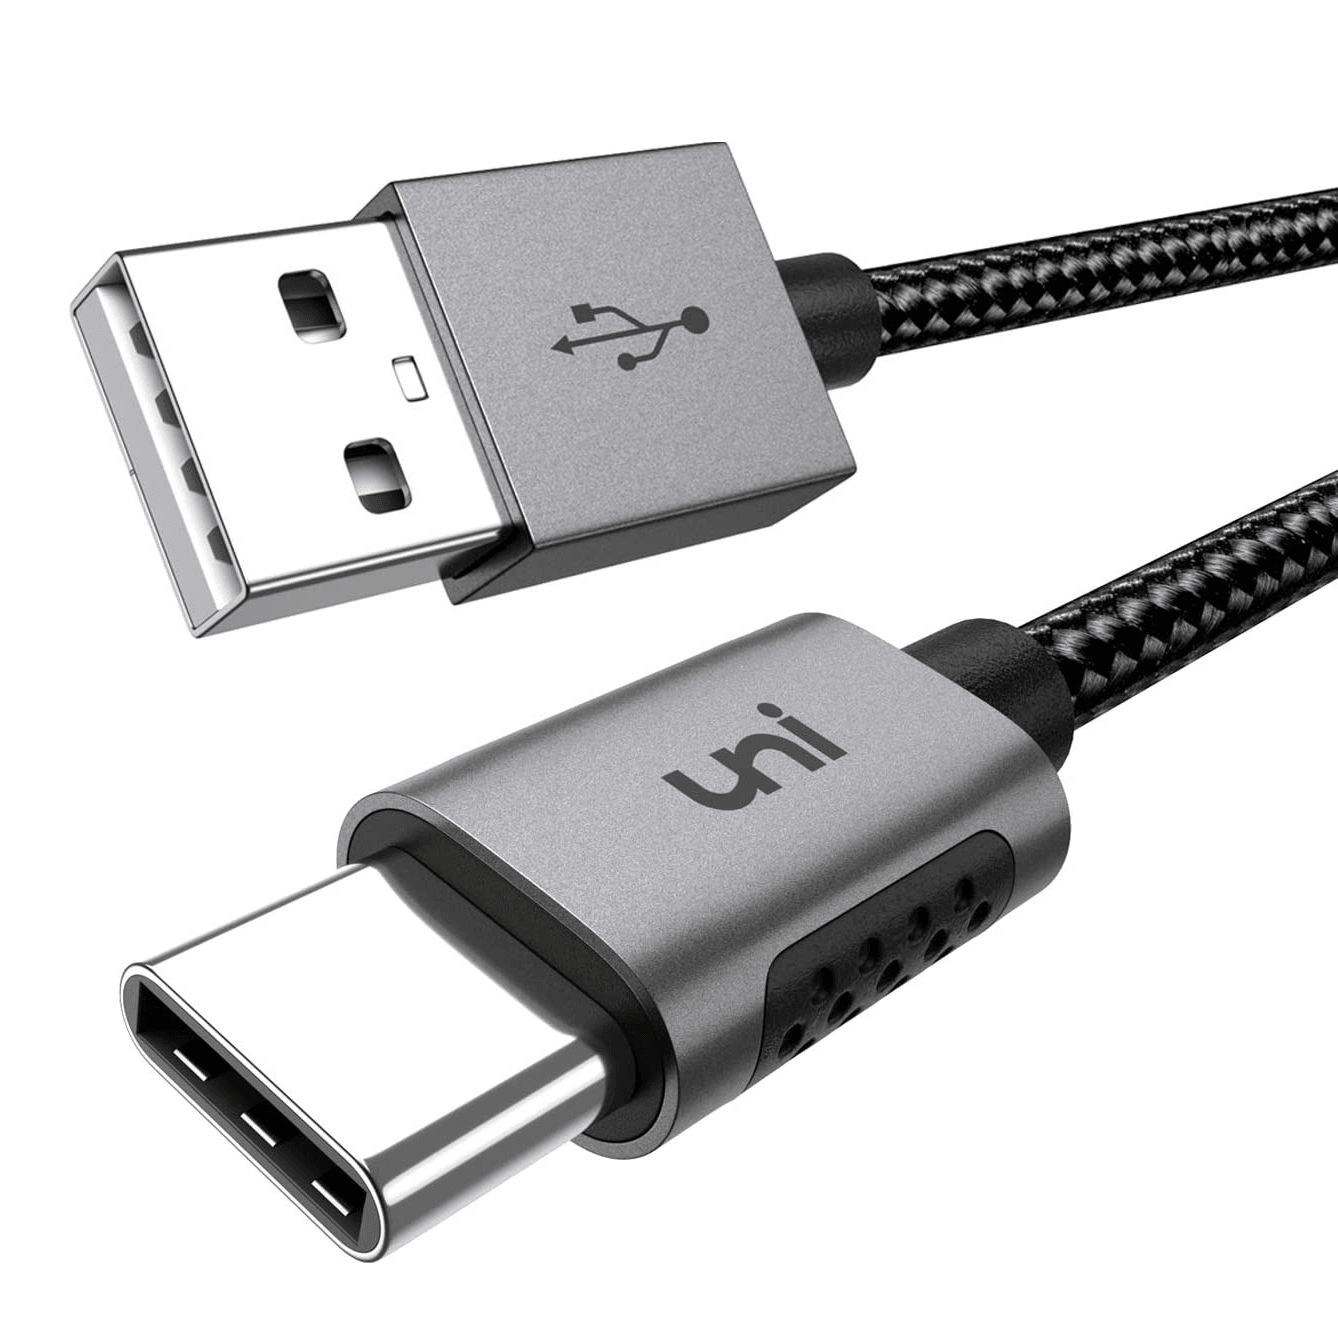 Cable de carga USB tipo C de carga rápida de 10 pies, extra largo paquete  de 2 cables de carga USB A a USB-C de 10 pies para Samsung Galaxy S20 S10